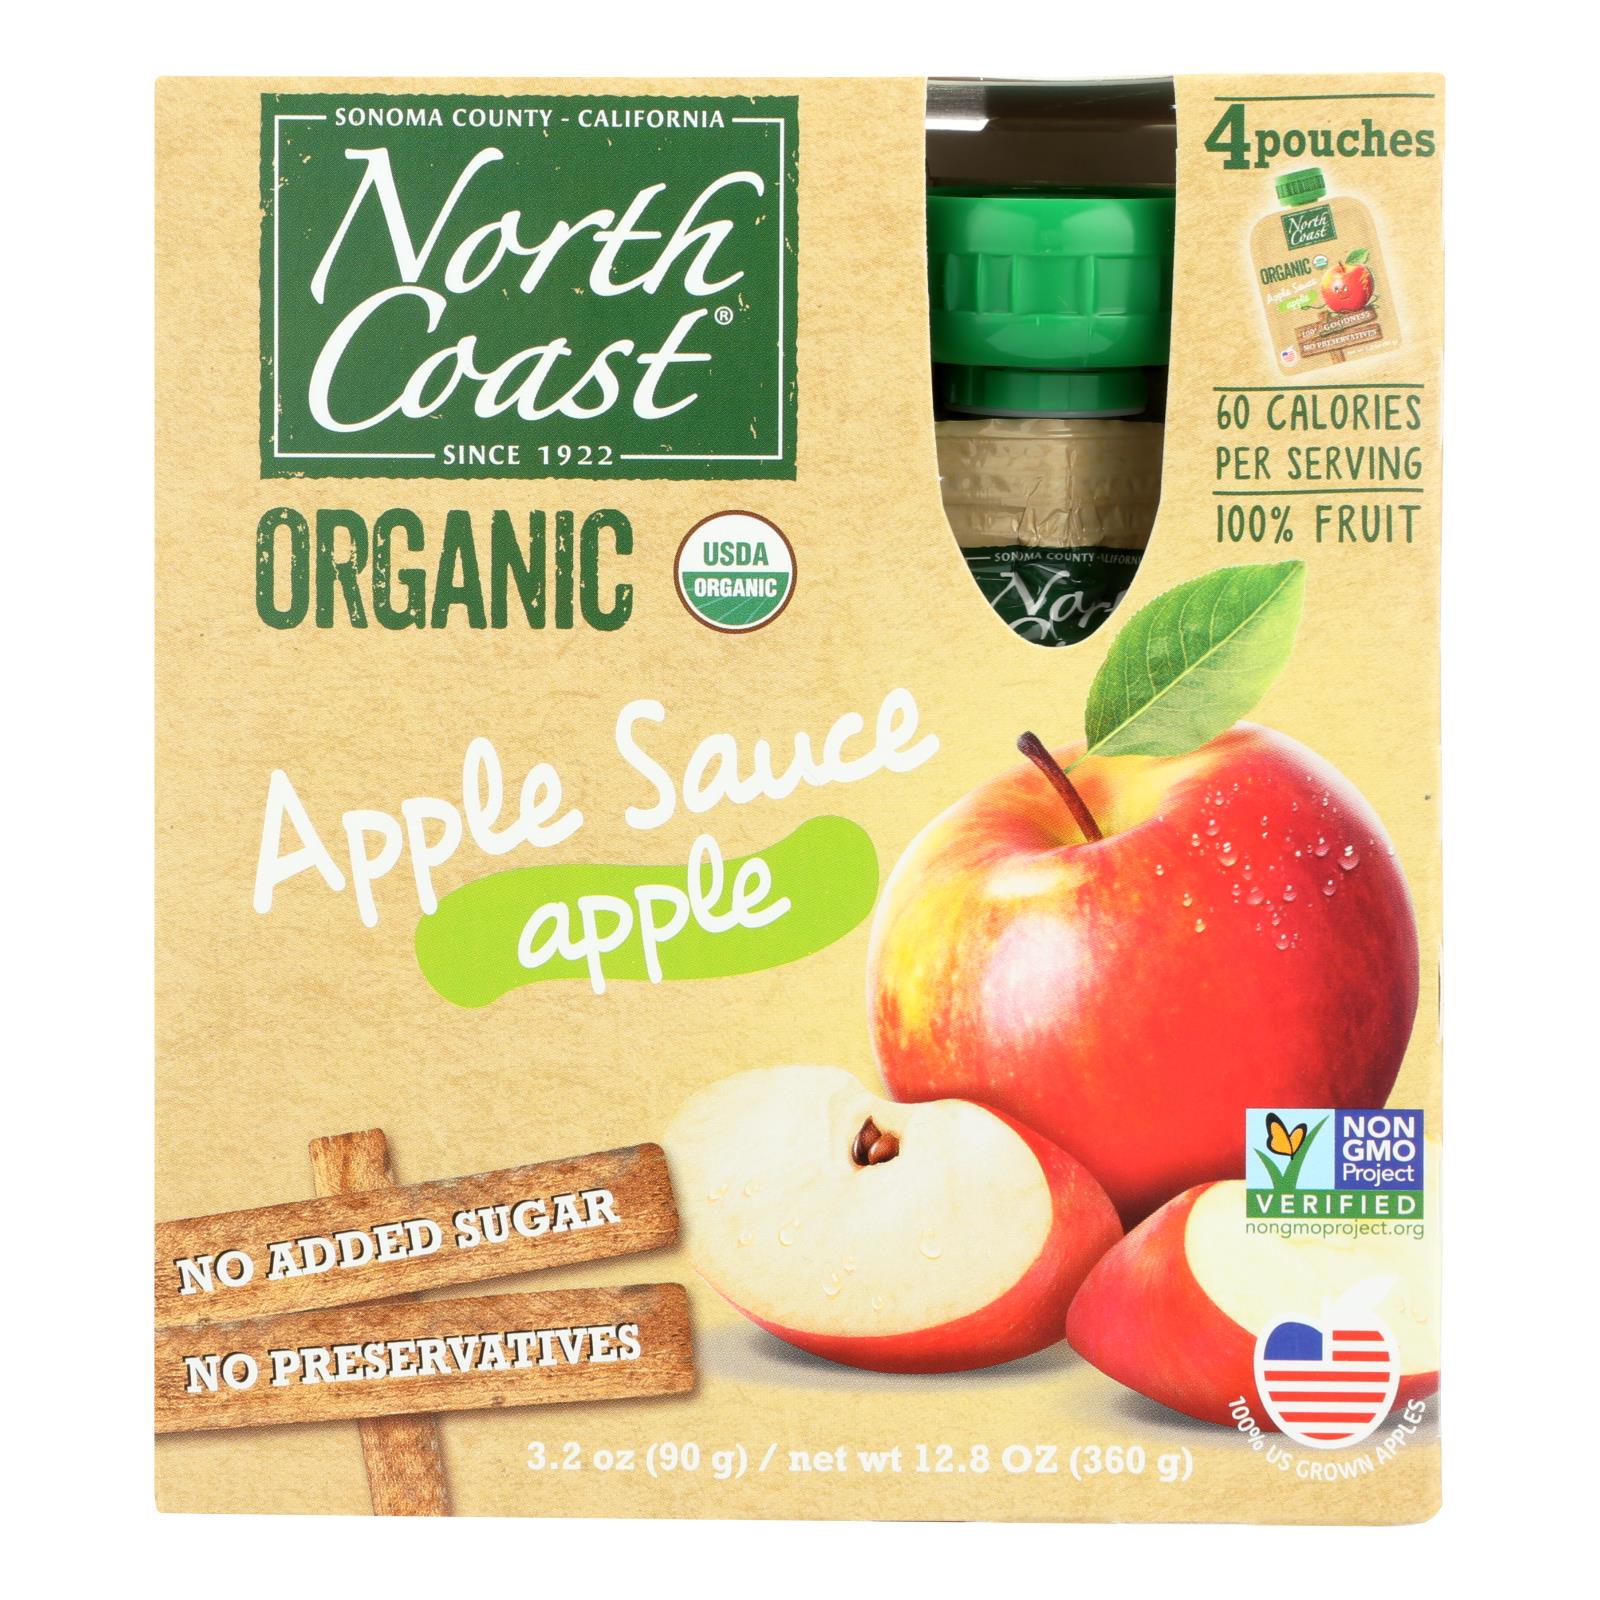 North Coast - Applesauce Pouch - Quantity: 6